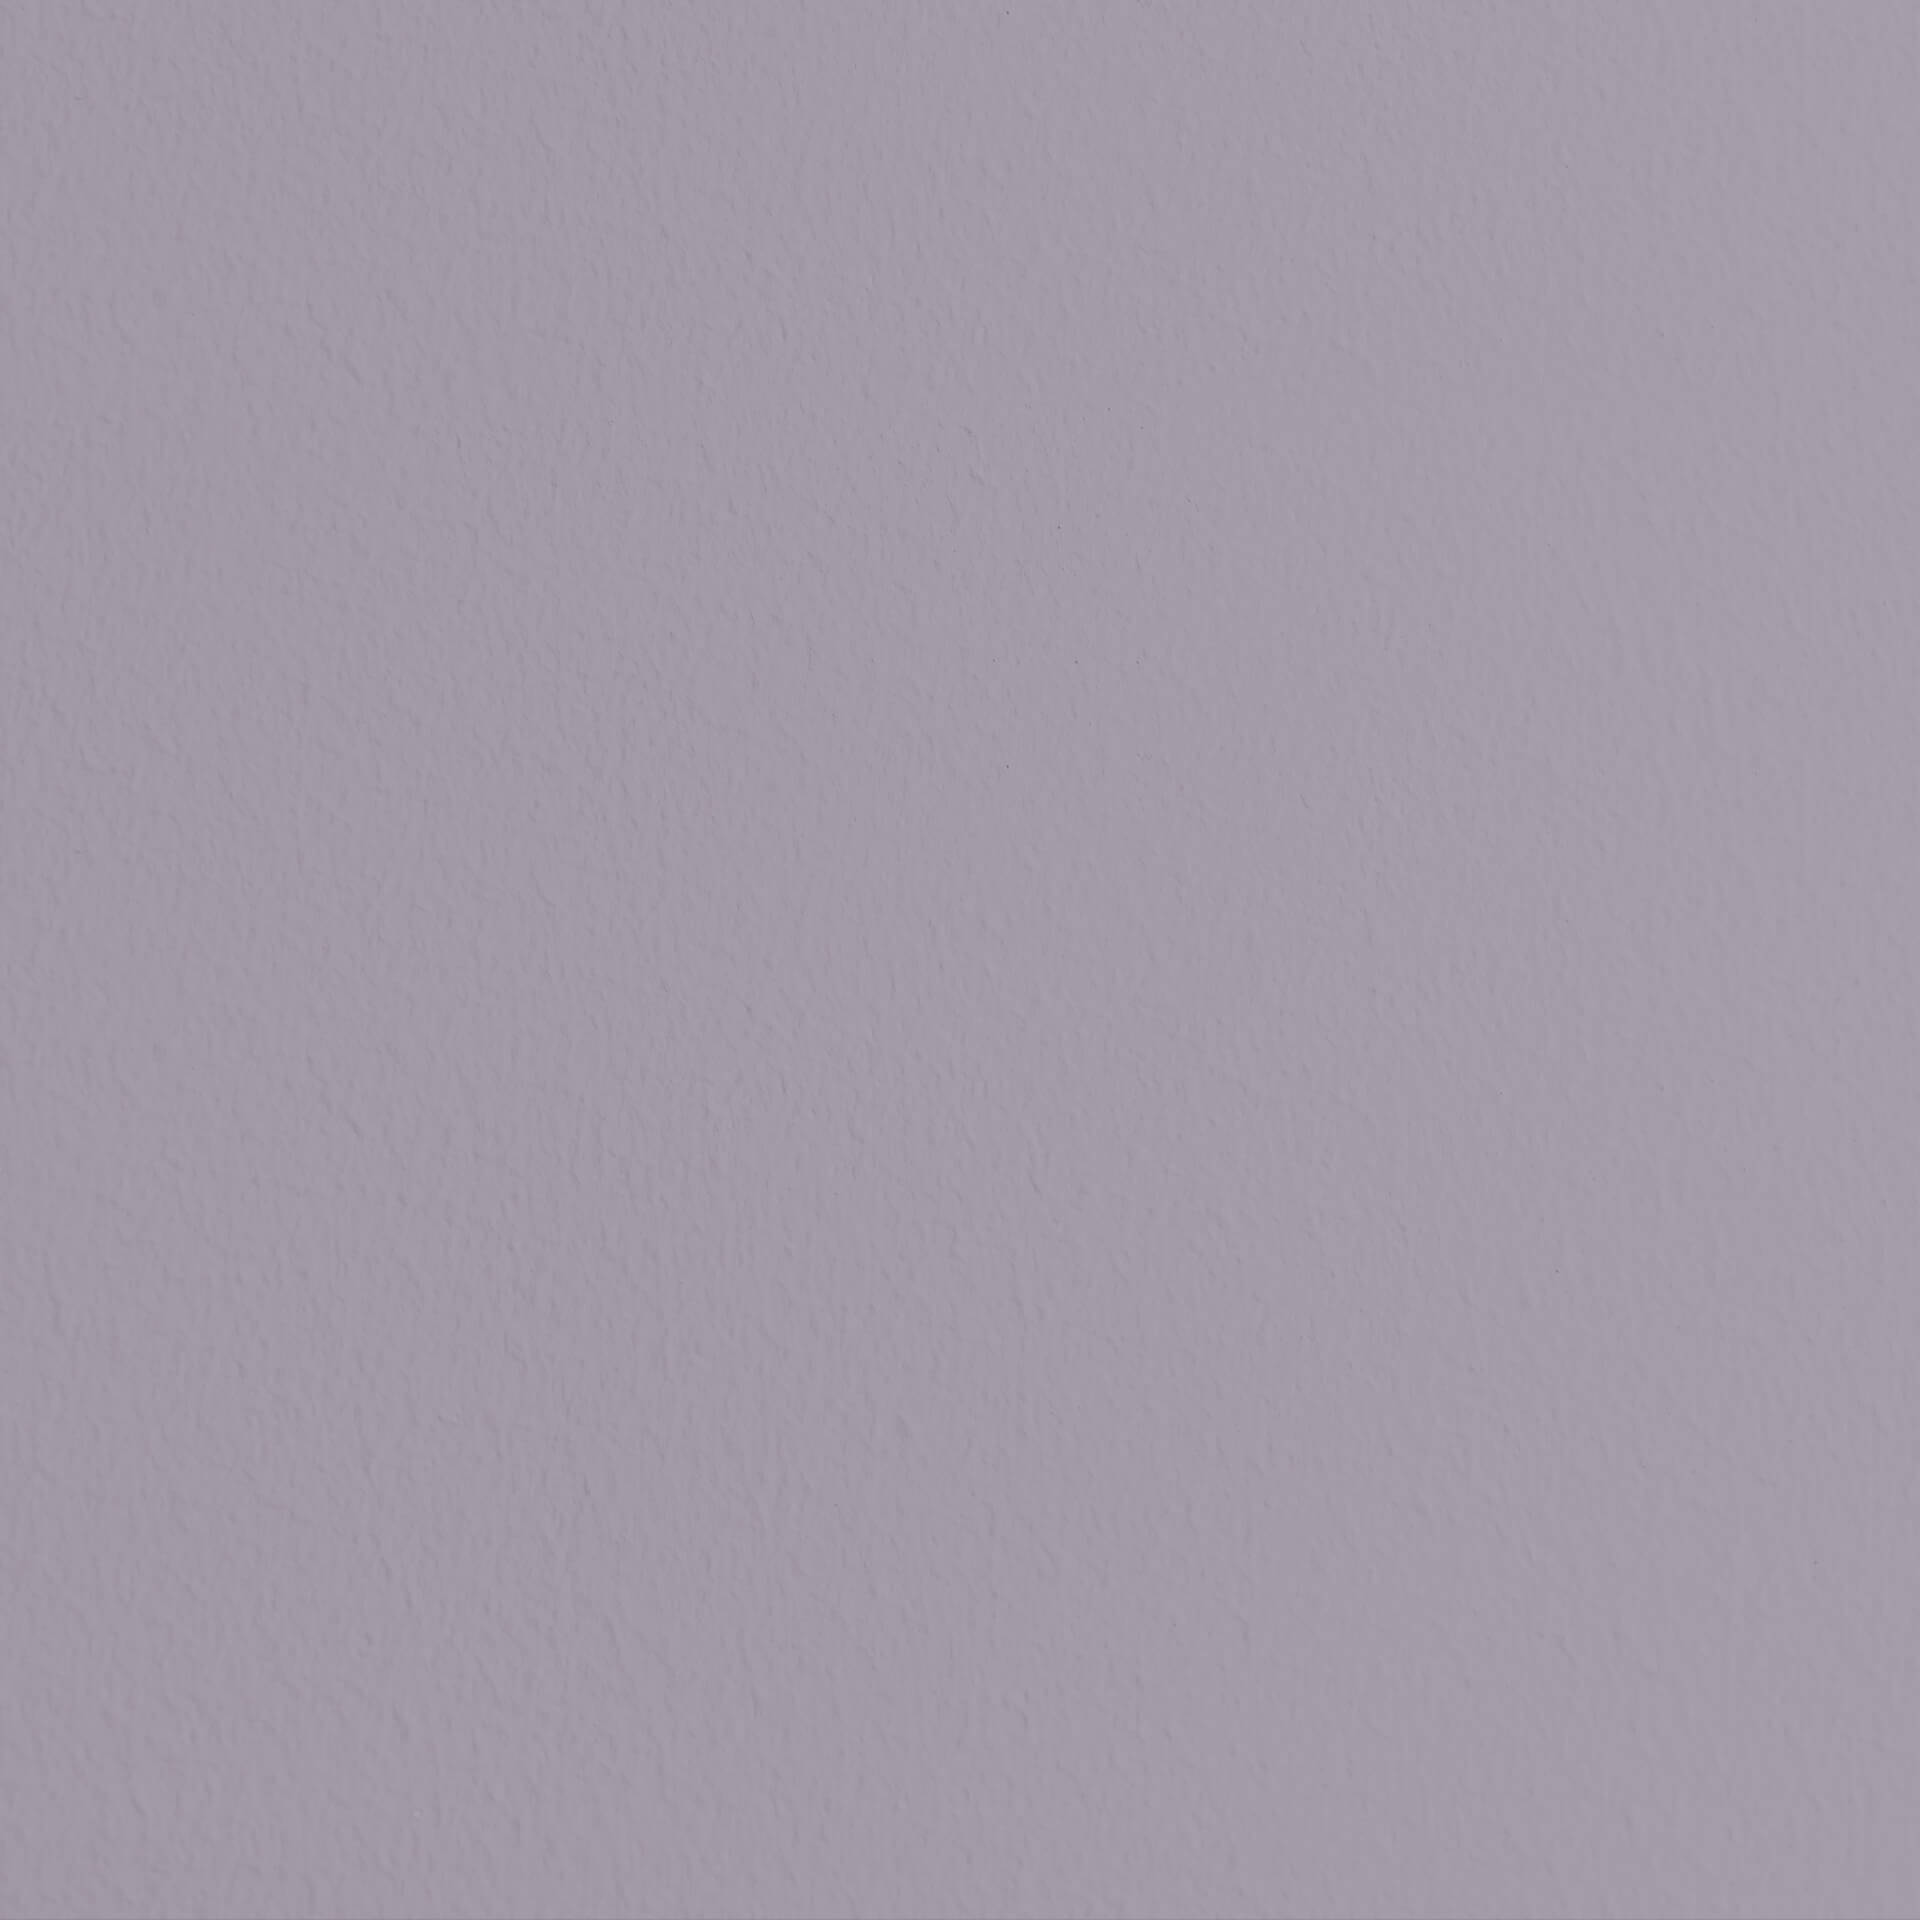 Mylands Lavender Garden No. 30 - Marble Matt Emulsion / Wandfarbe, 2.5L